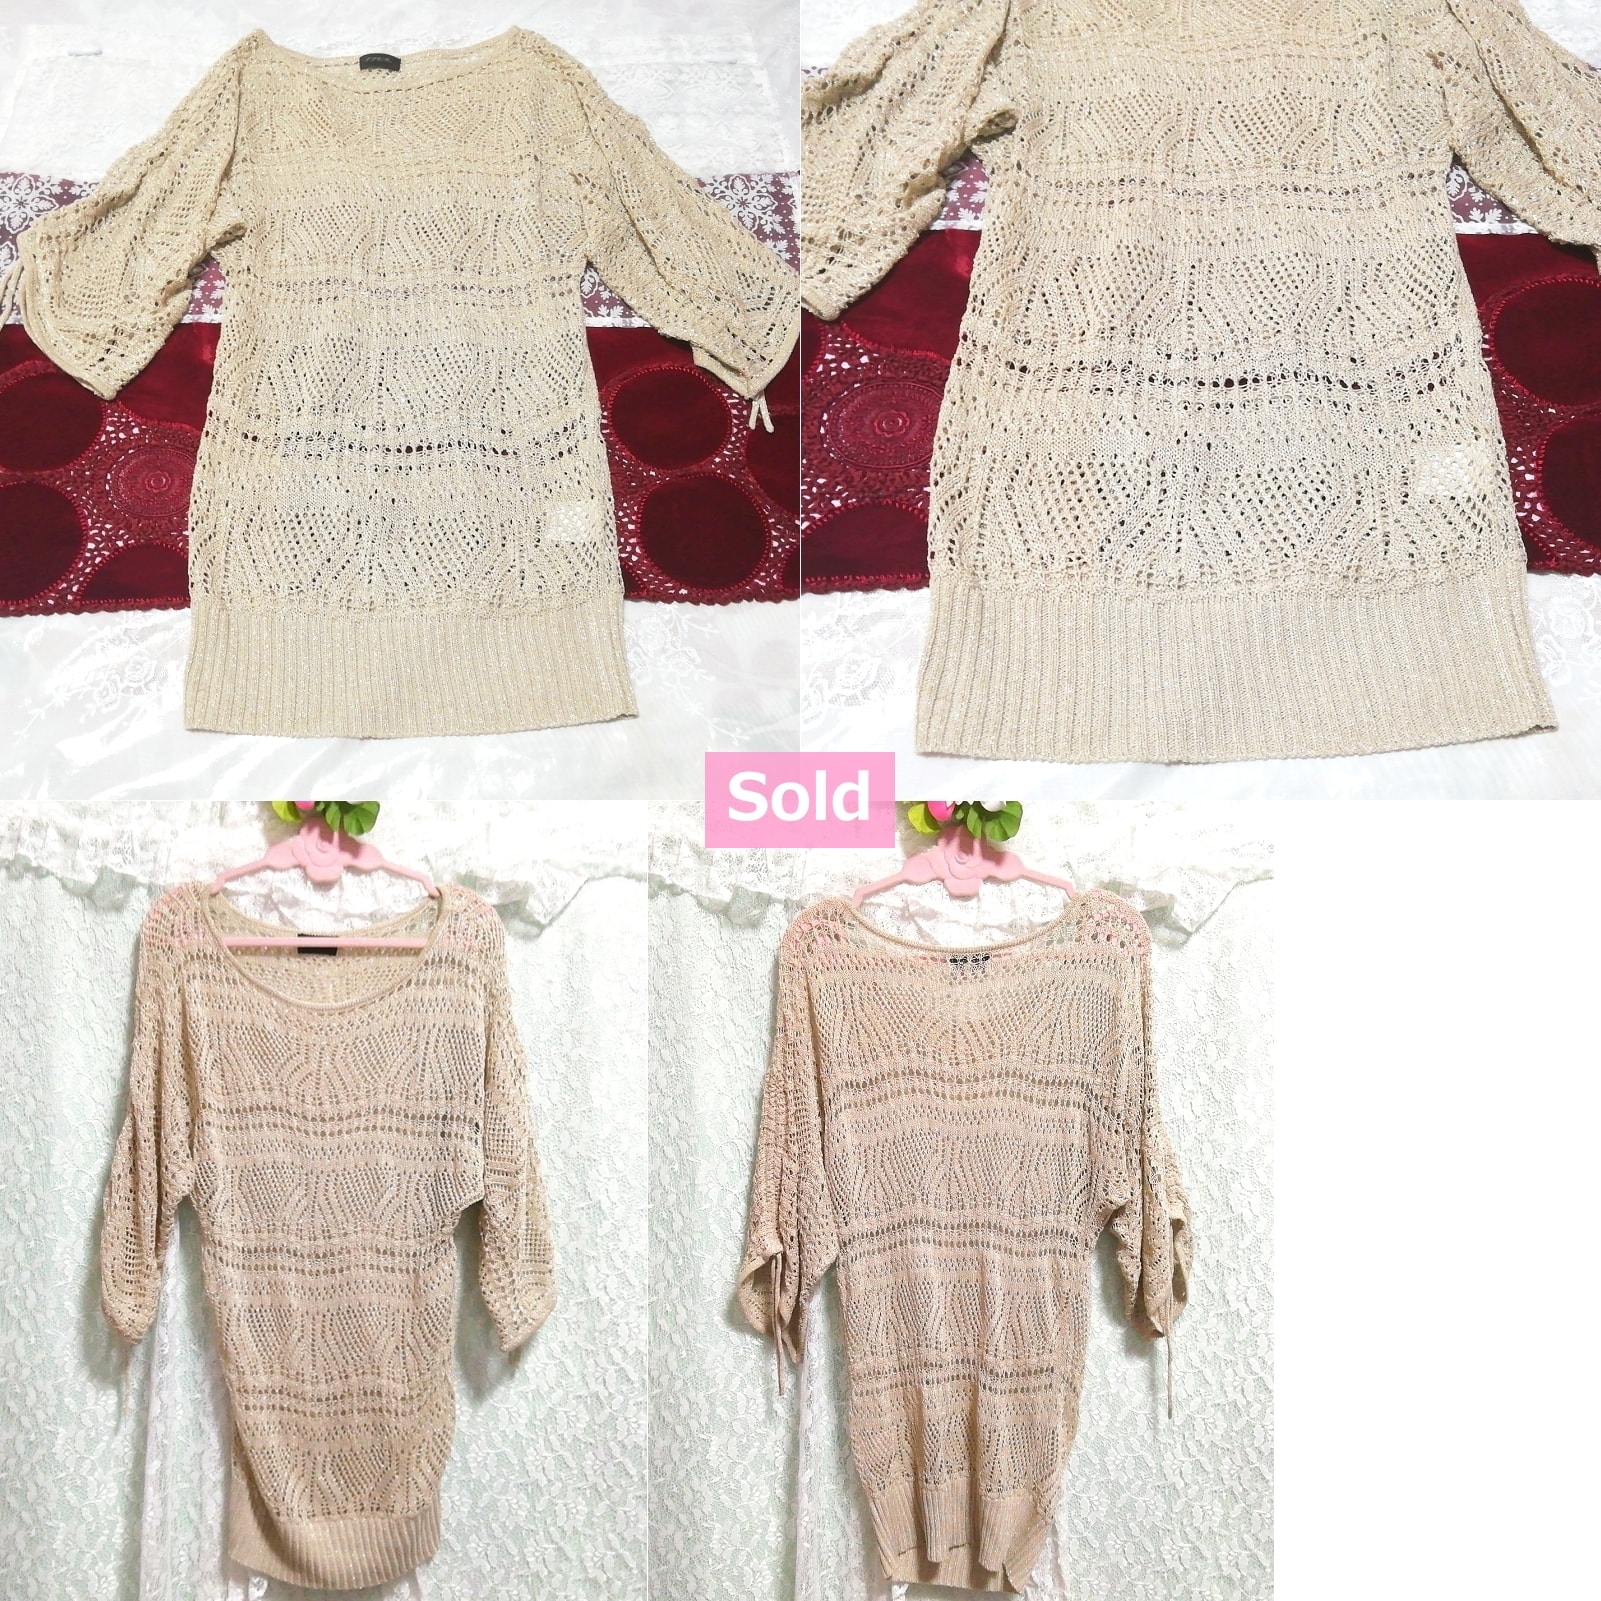 Flaxen knit lace tunic negligee nightgown dress, tunic, long sleeve, m size